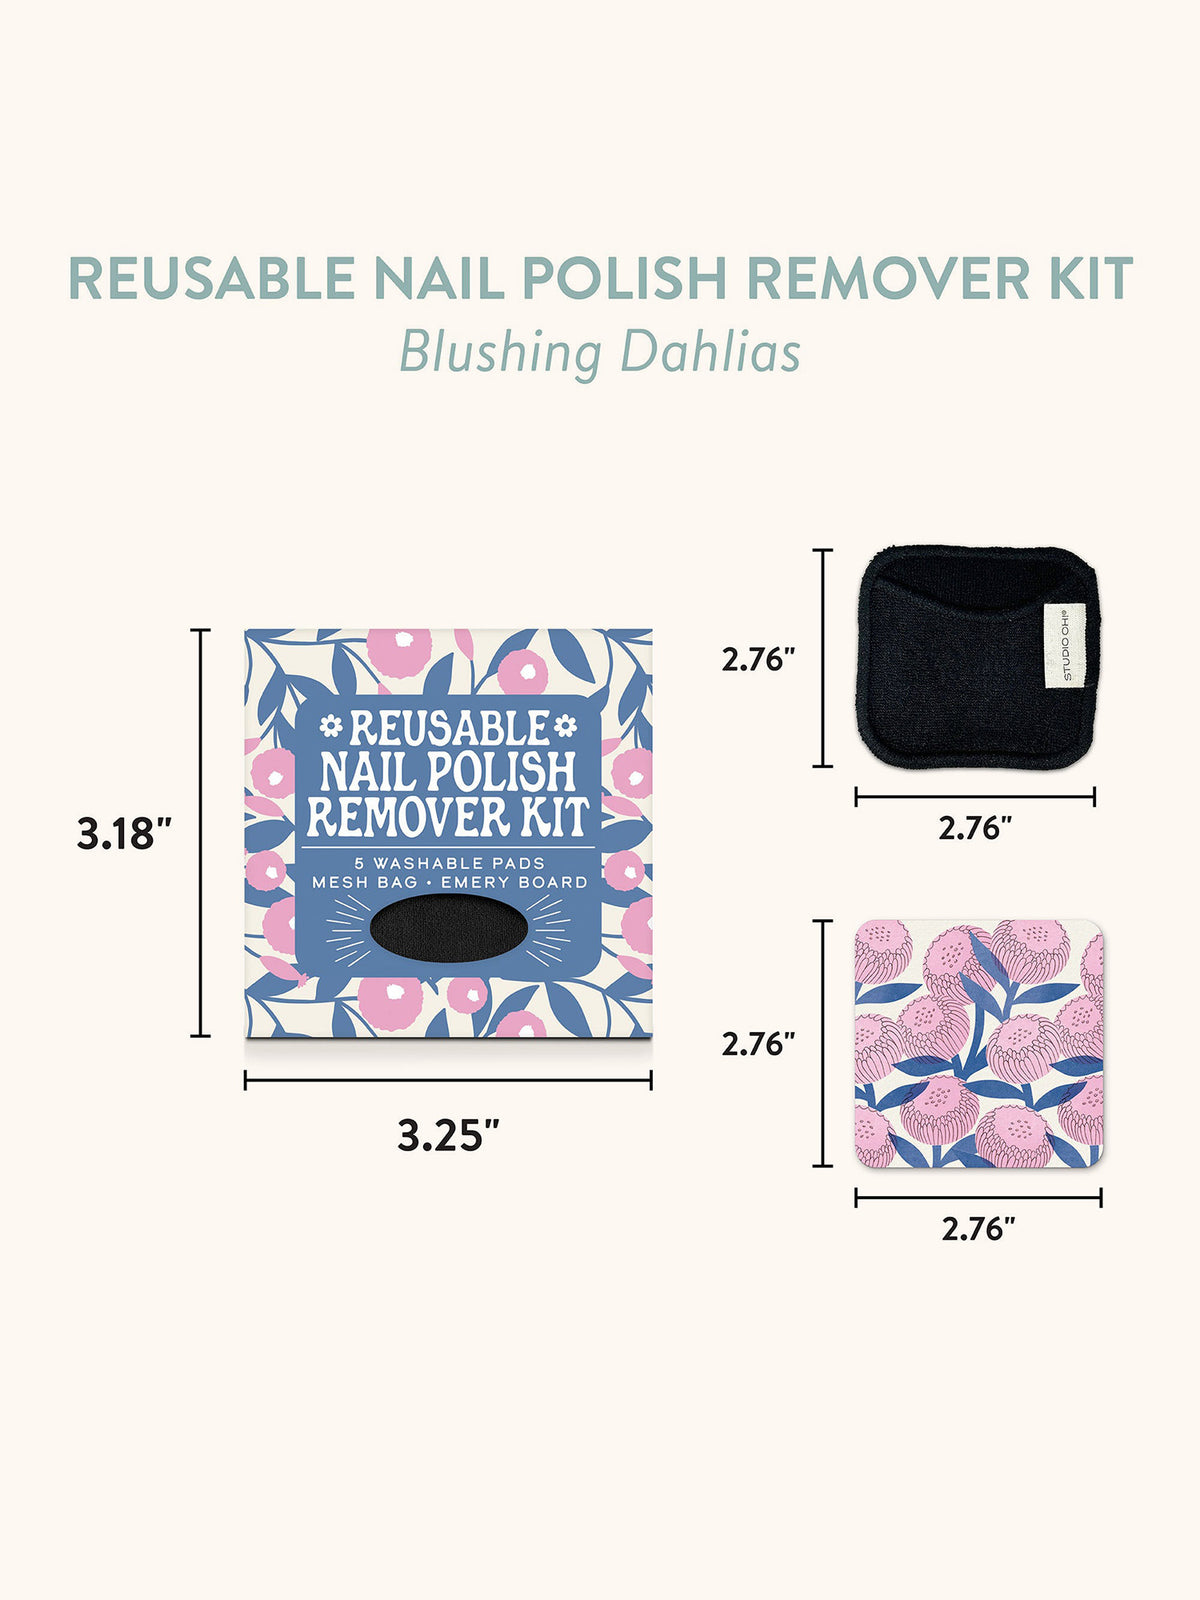 Blushing Dahlias Reusable Nail Polish Remover Kit